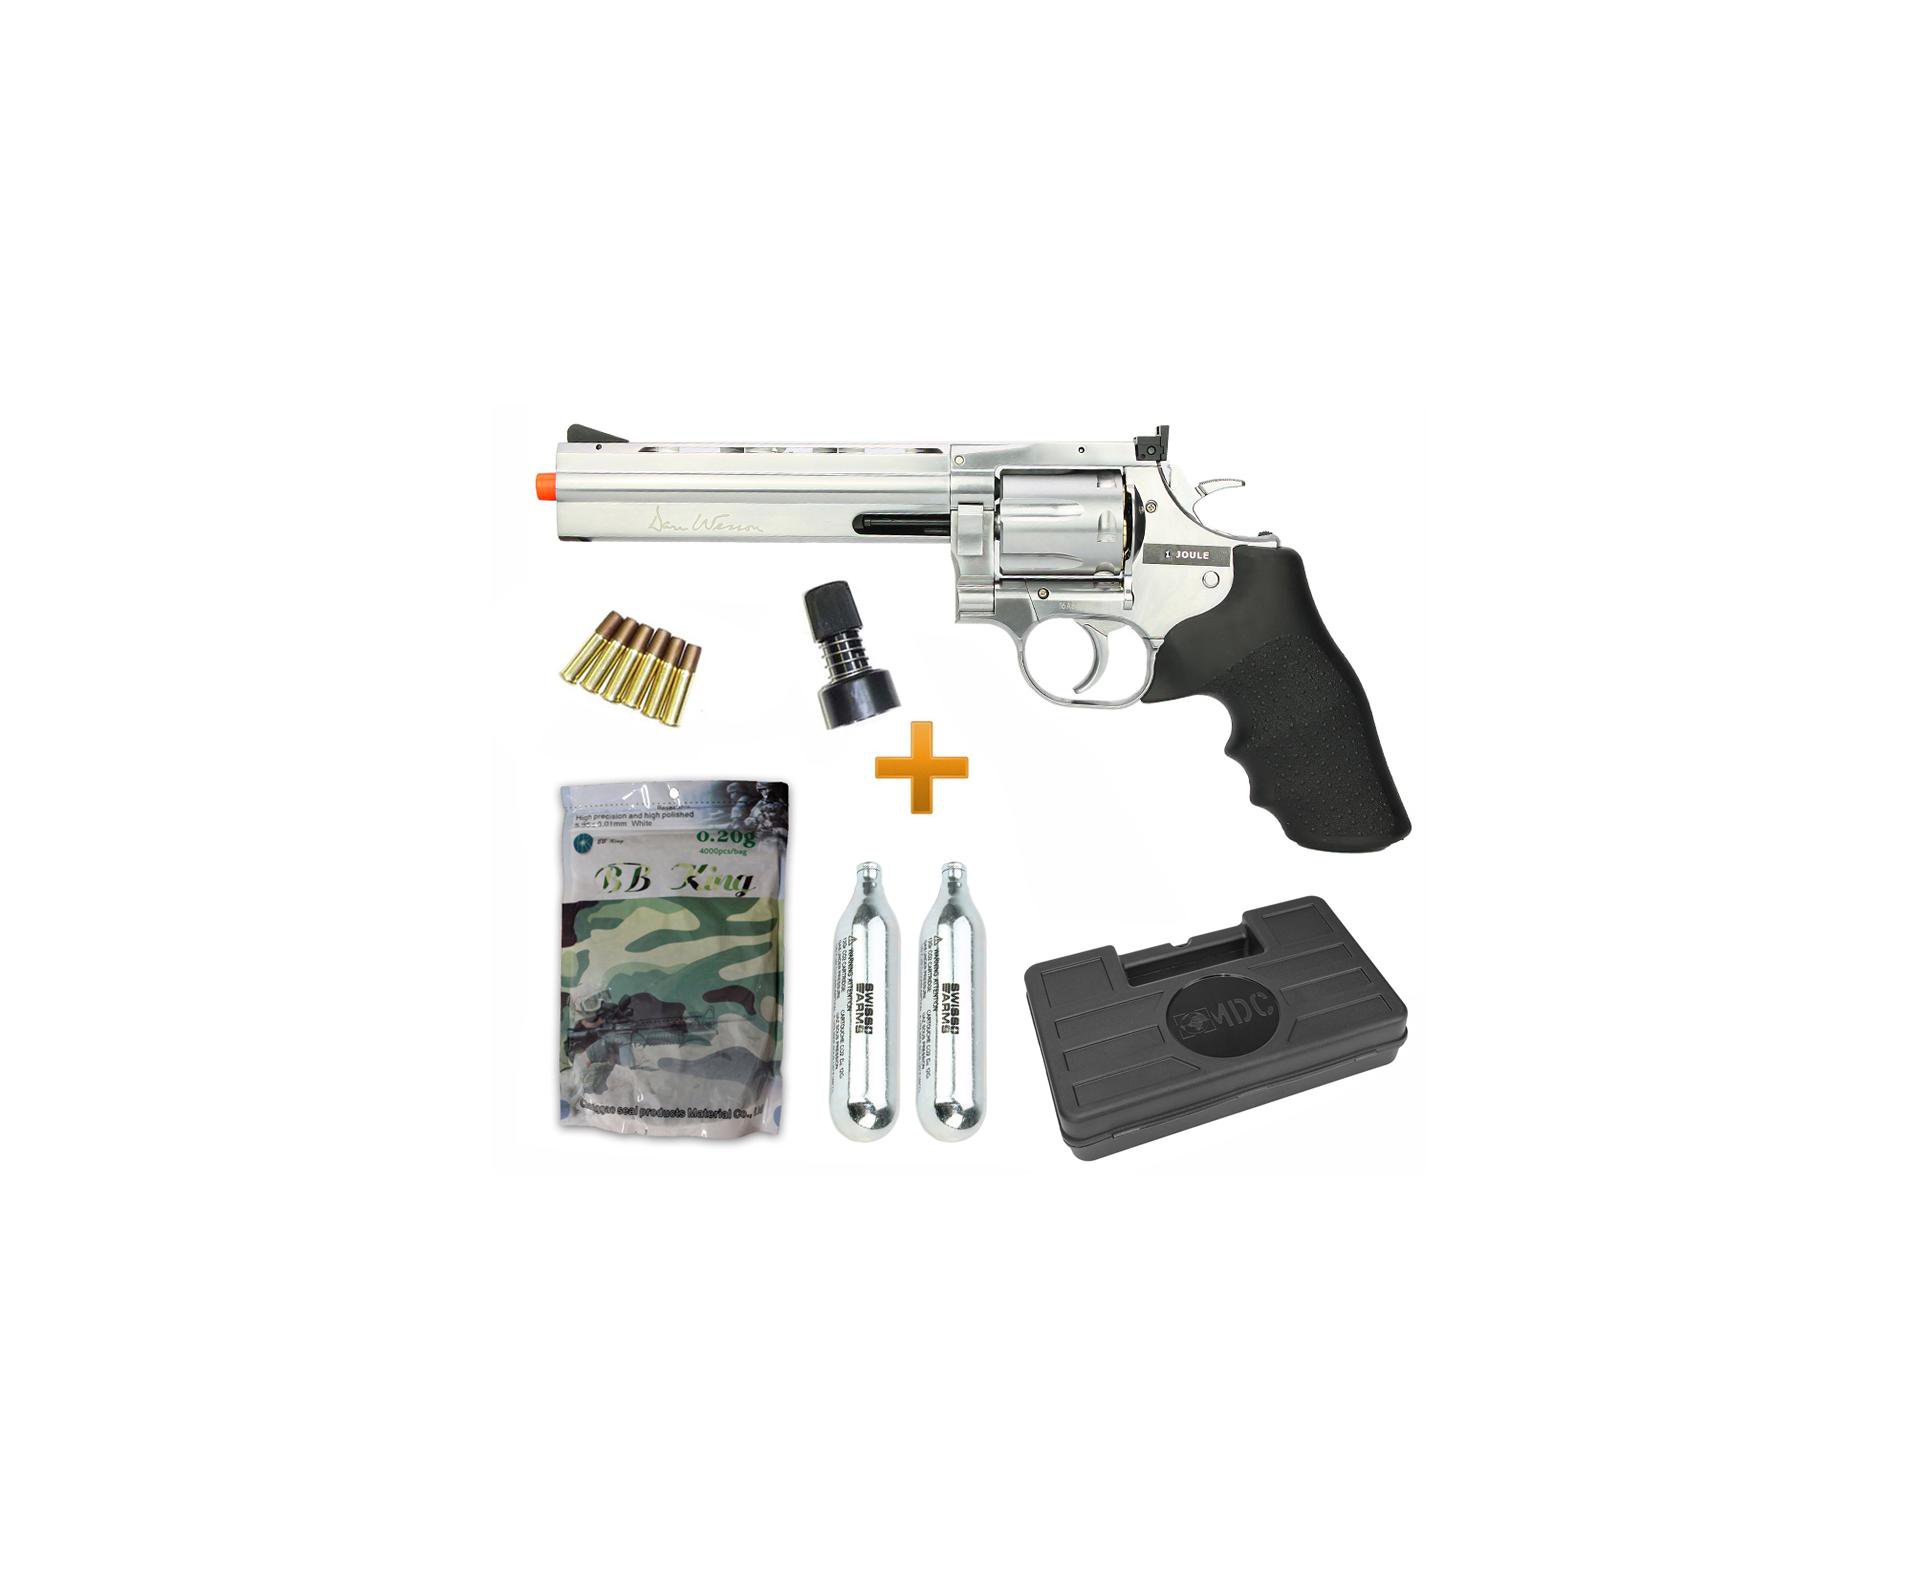 Revolver De Airsoft Co2 Full Metal Dan Weson 715 6" Inox Low Power Silver 6,0mm - Asg + Maleta + Co2 + Munição